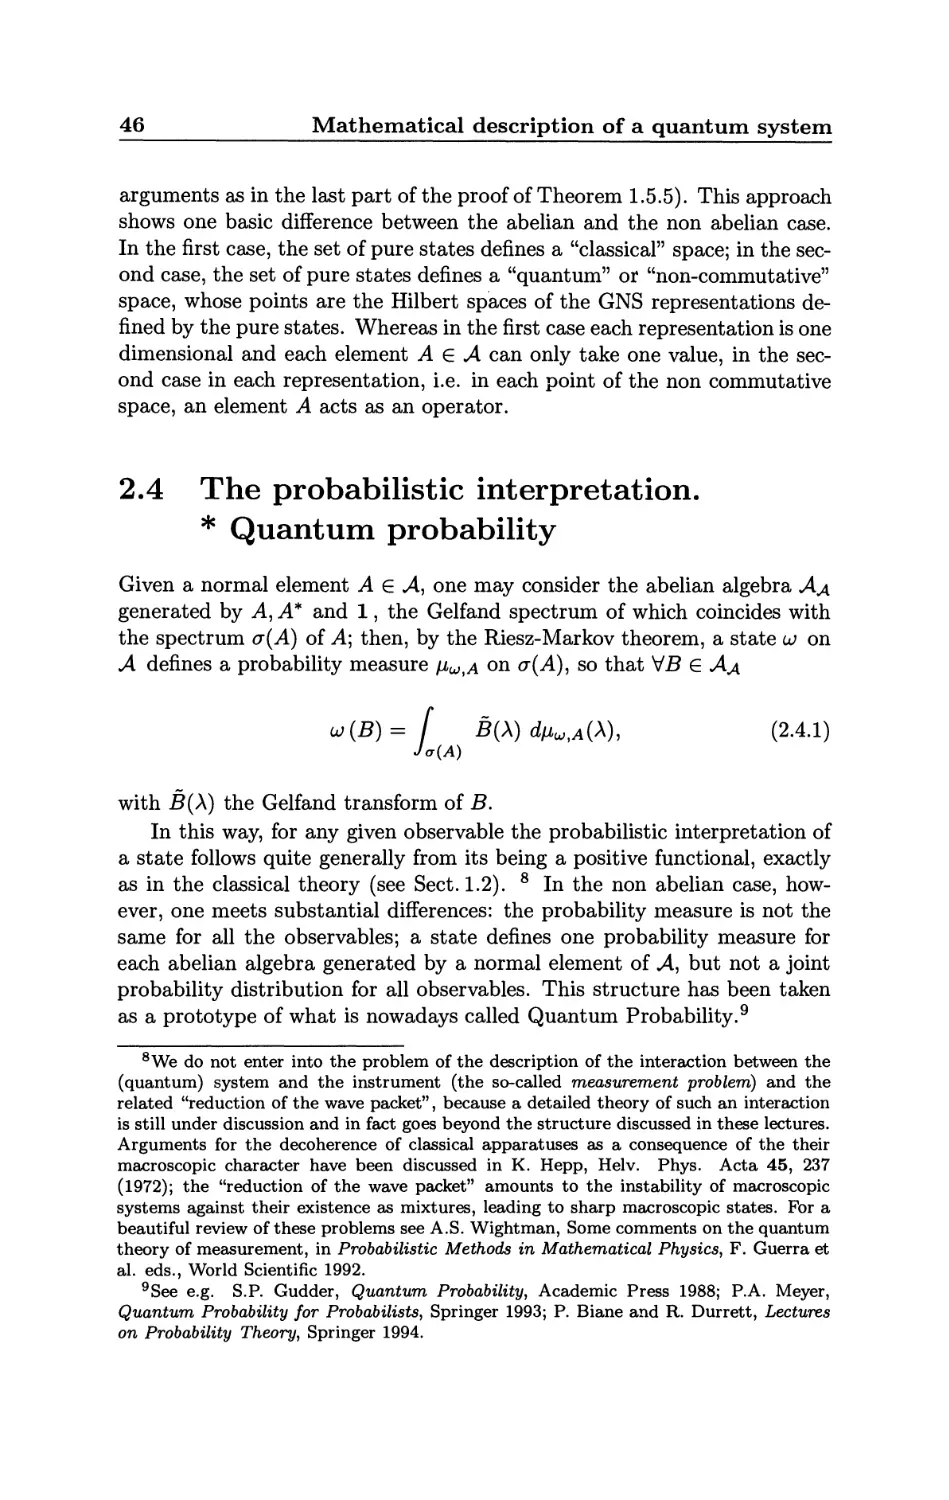 2.4 The probabilistic interpretation. Quantum probability